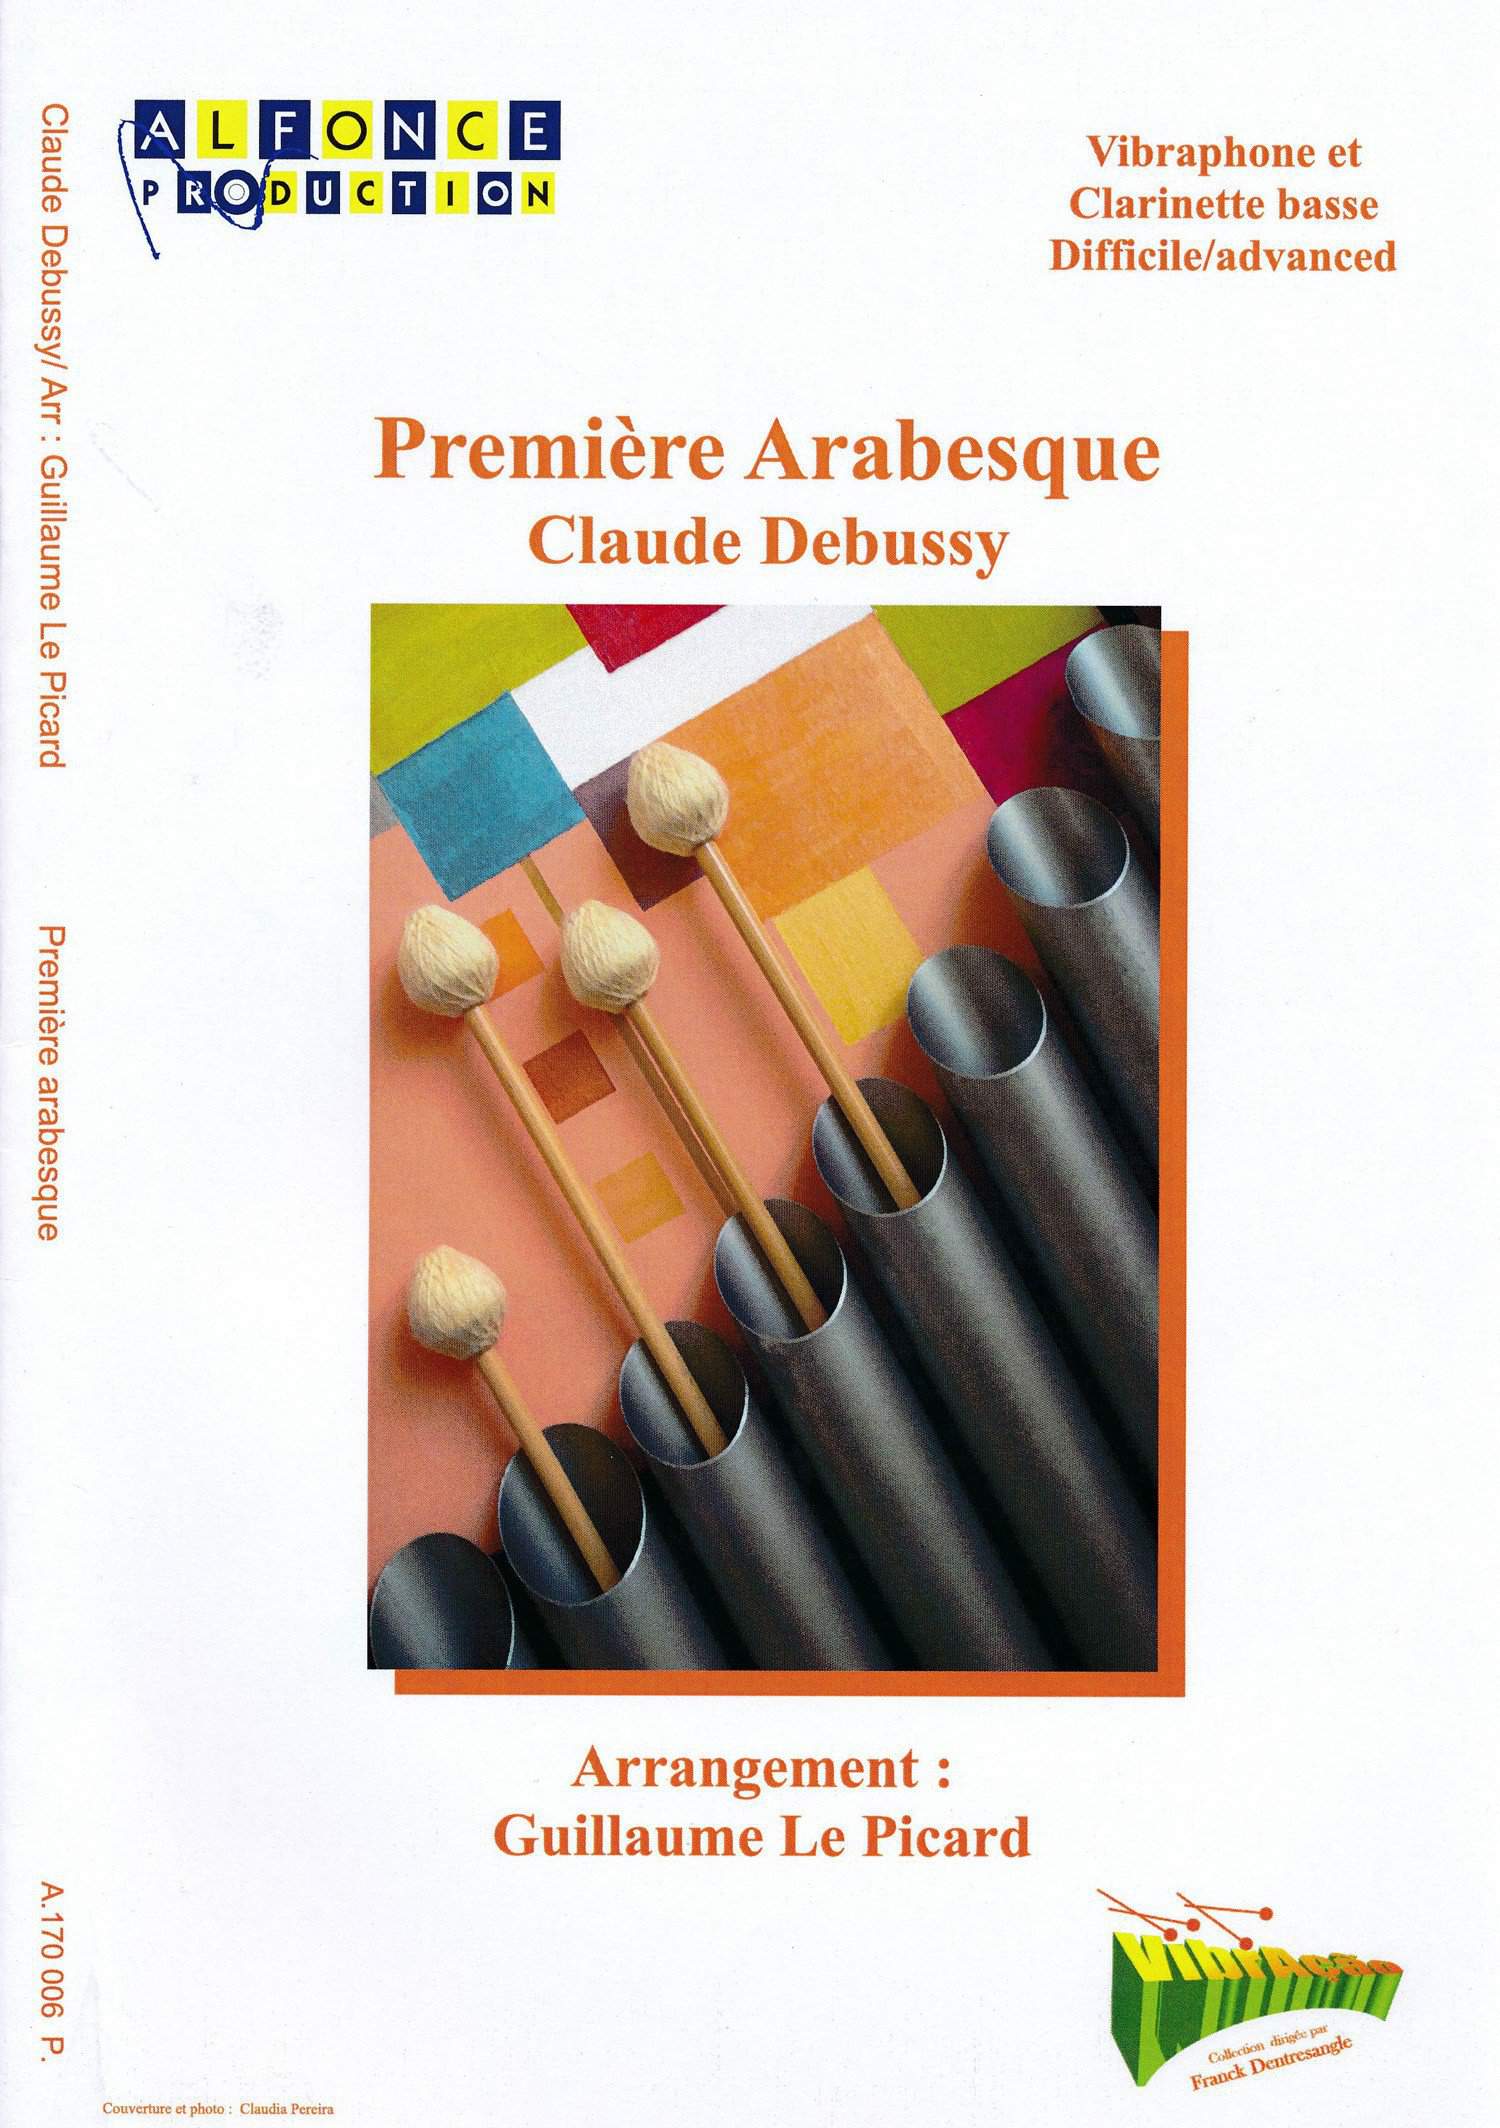 Premiere Arabesque by Debussy arr. Guillaume Le Picard